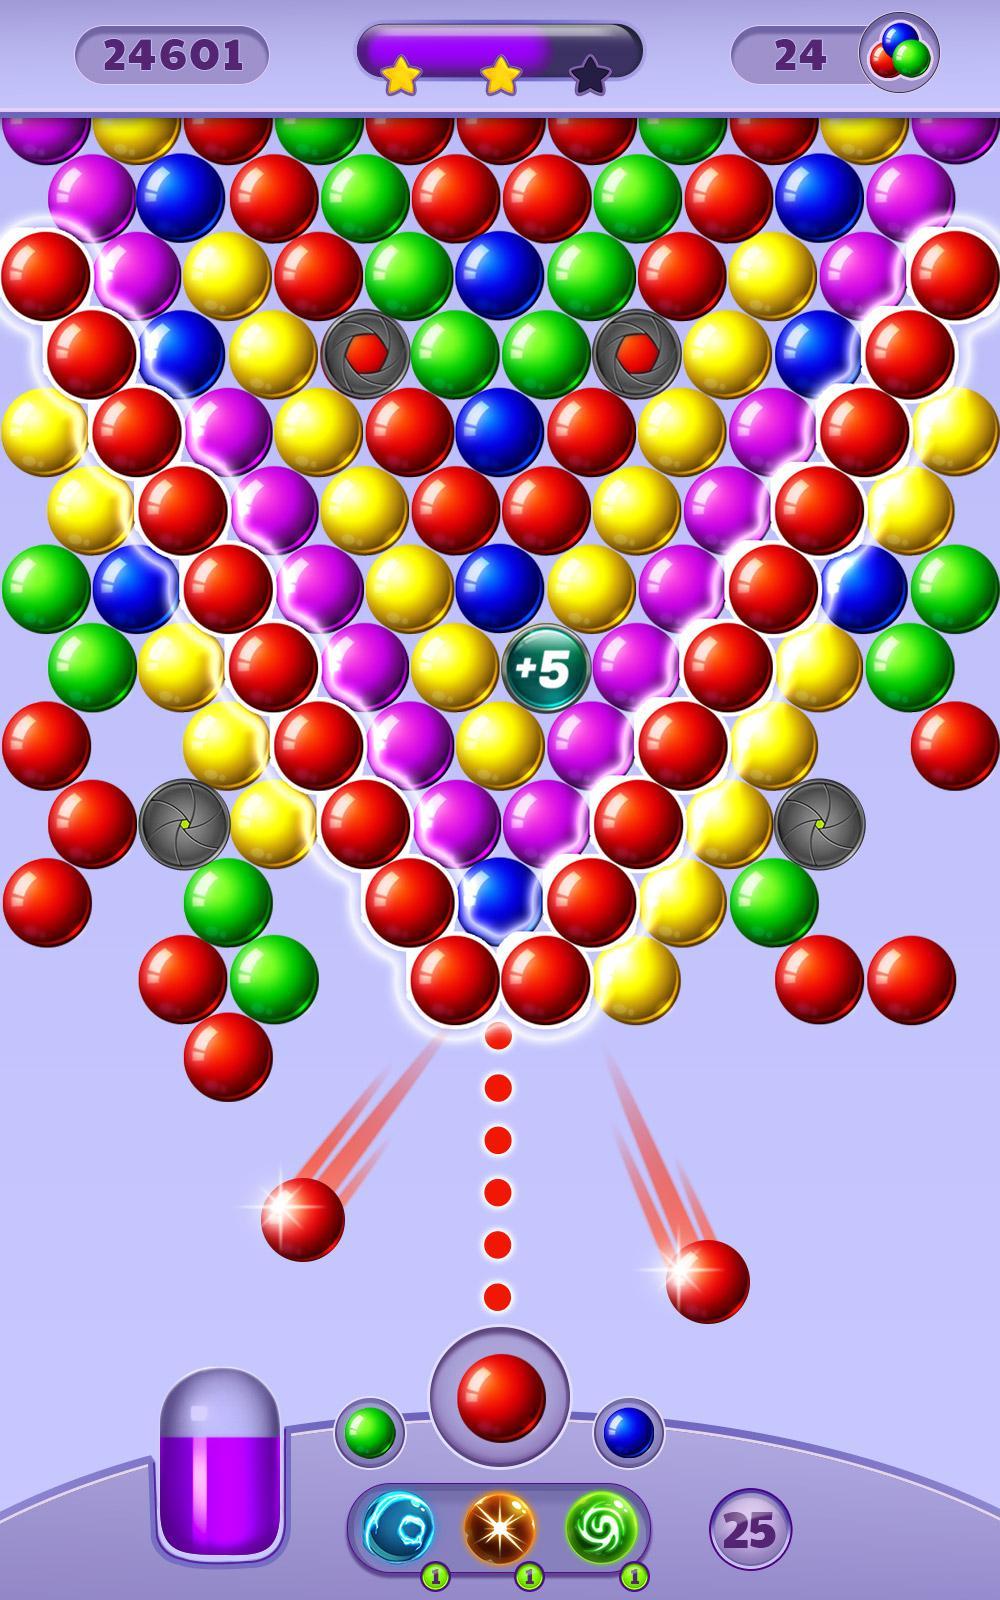 Screenshot of Bubble Pop Master